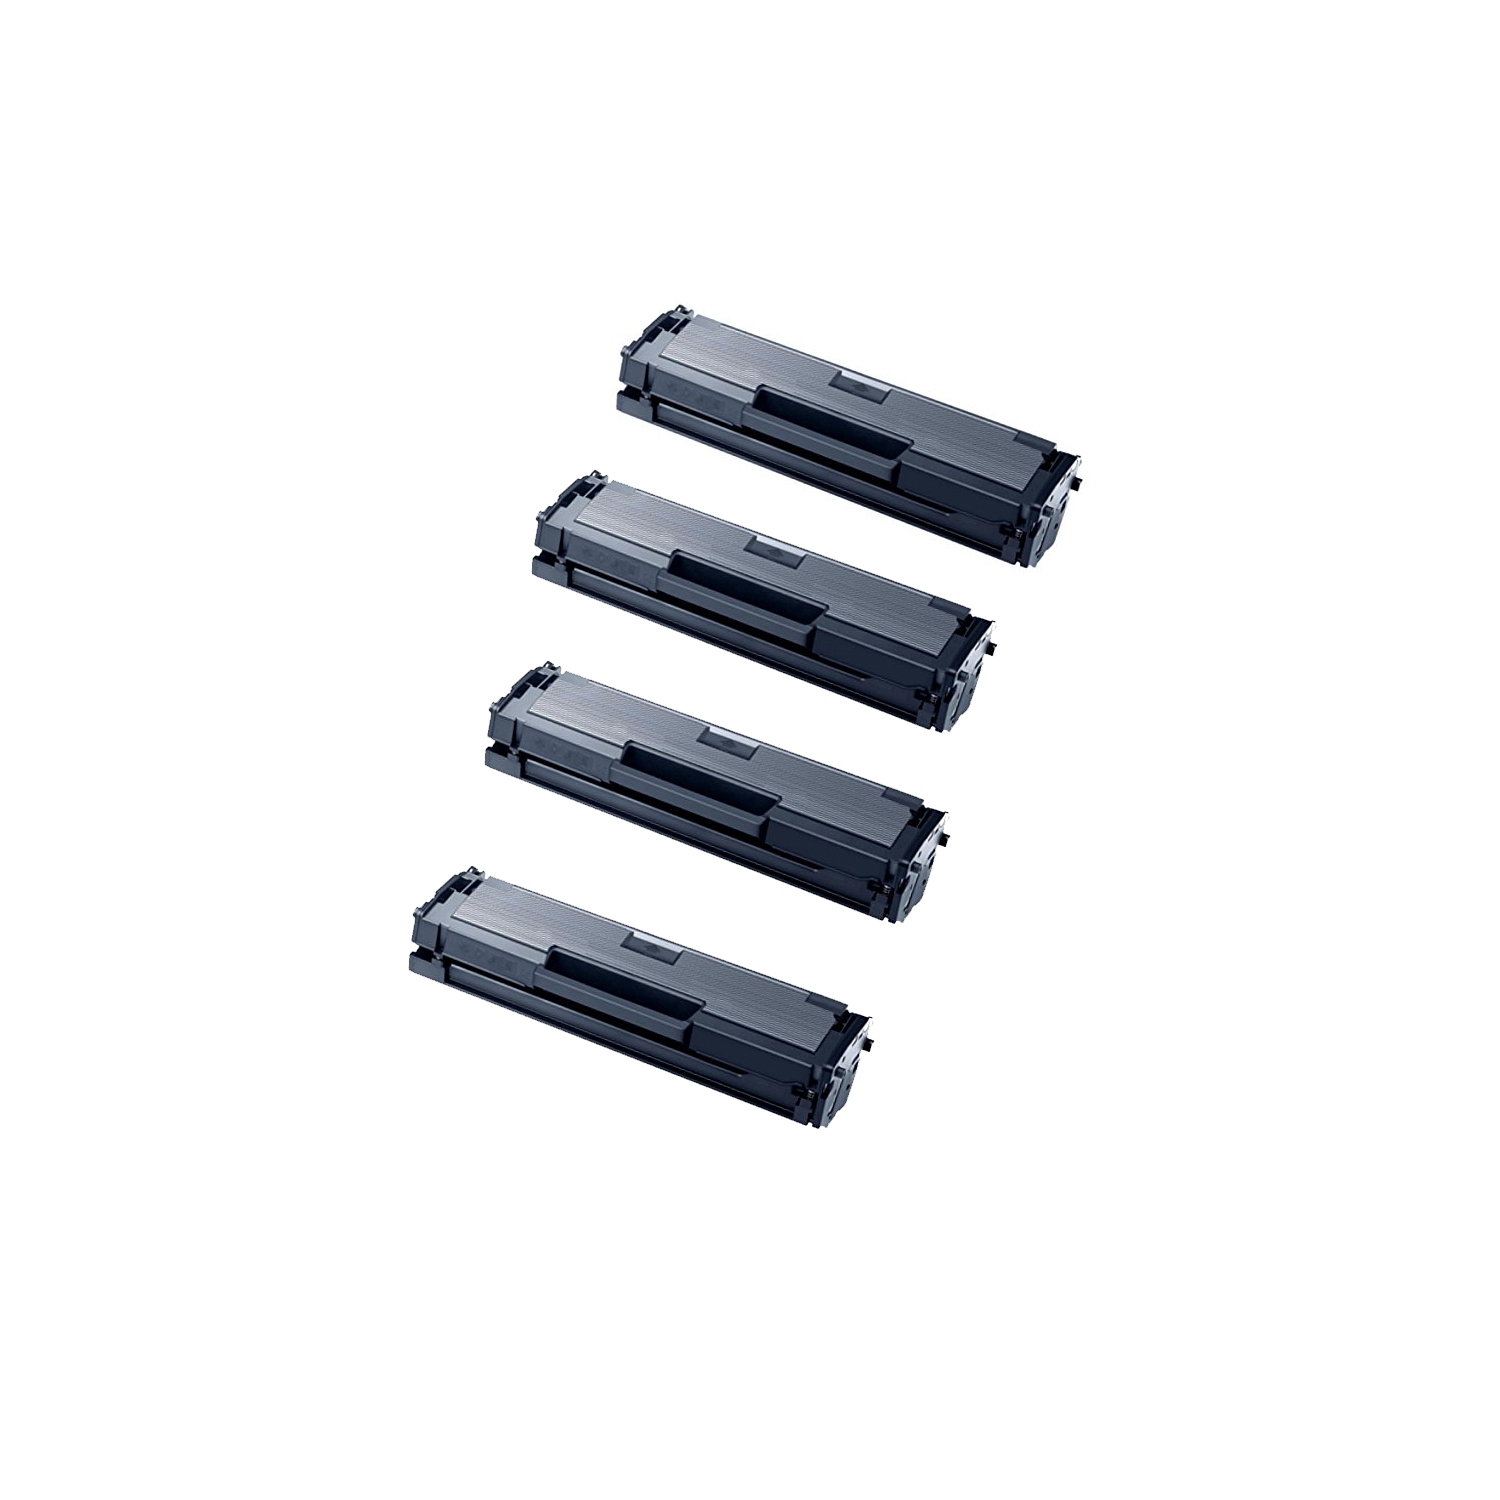 4Pack Toner Cartridges MLT-D111S Compatible for Samsung MLT-D111S D111S Xpress M2020 M2020W M2021 M2021W M2022 M2022W M2070